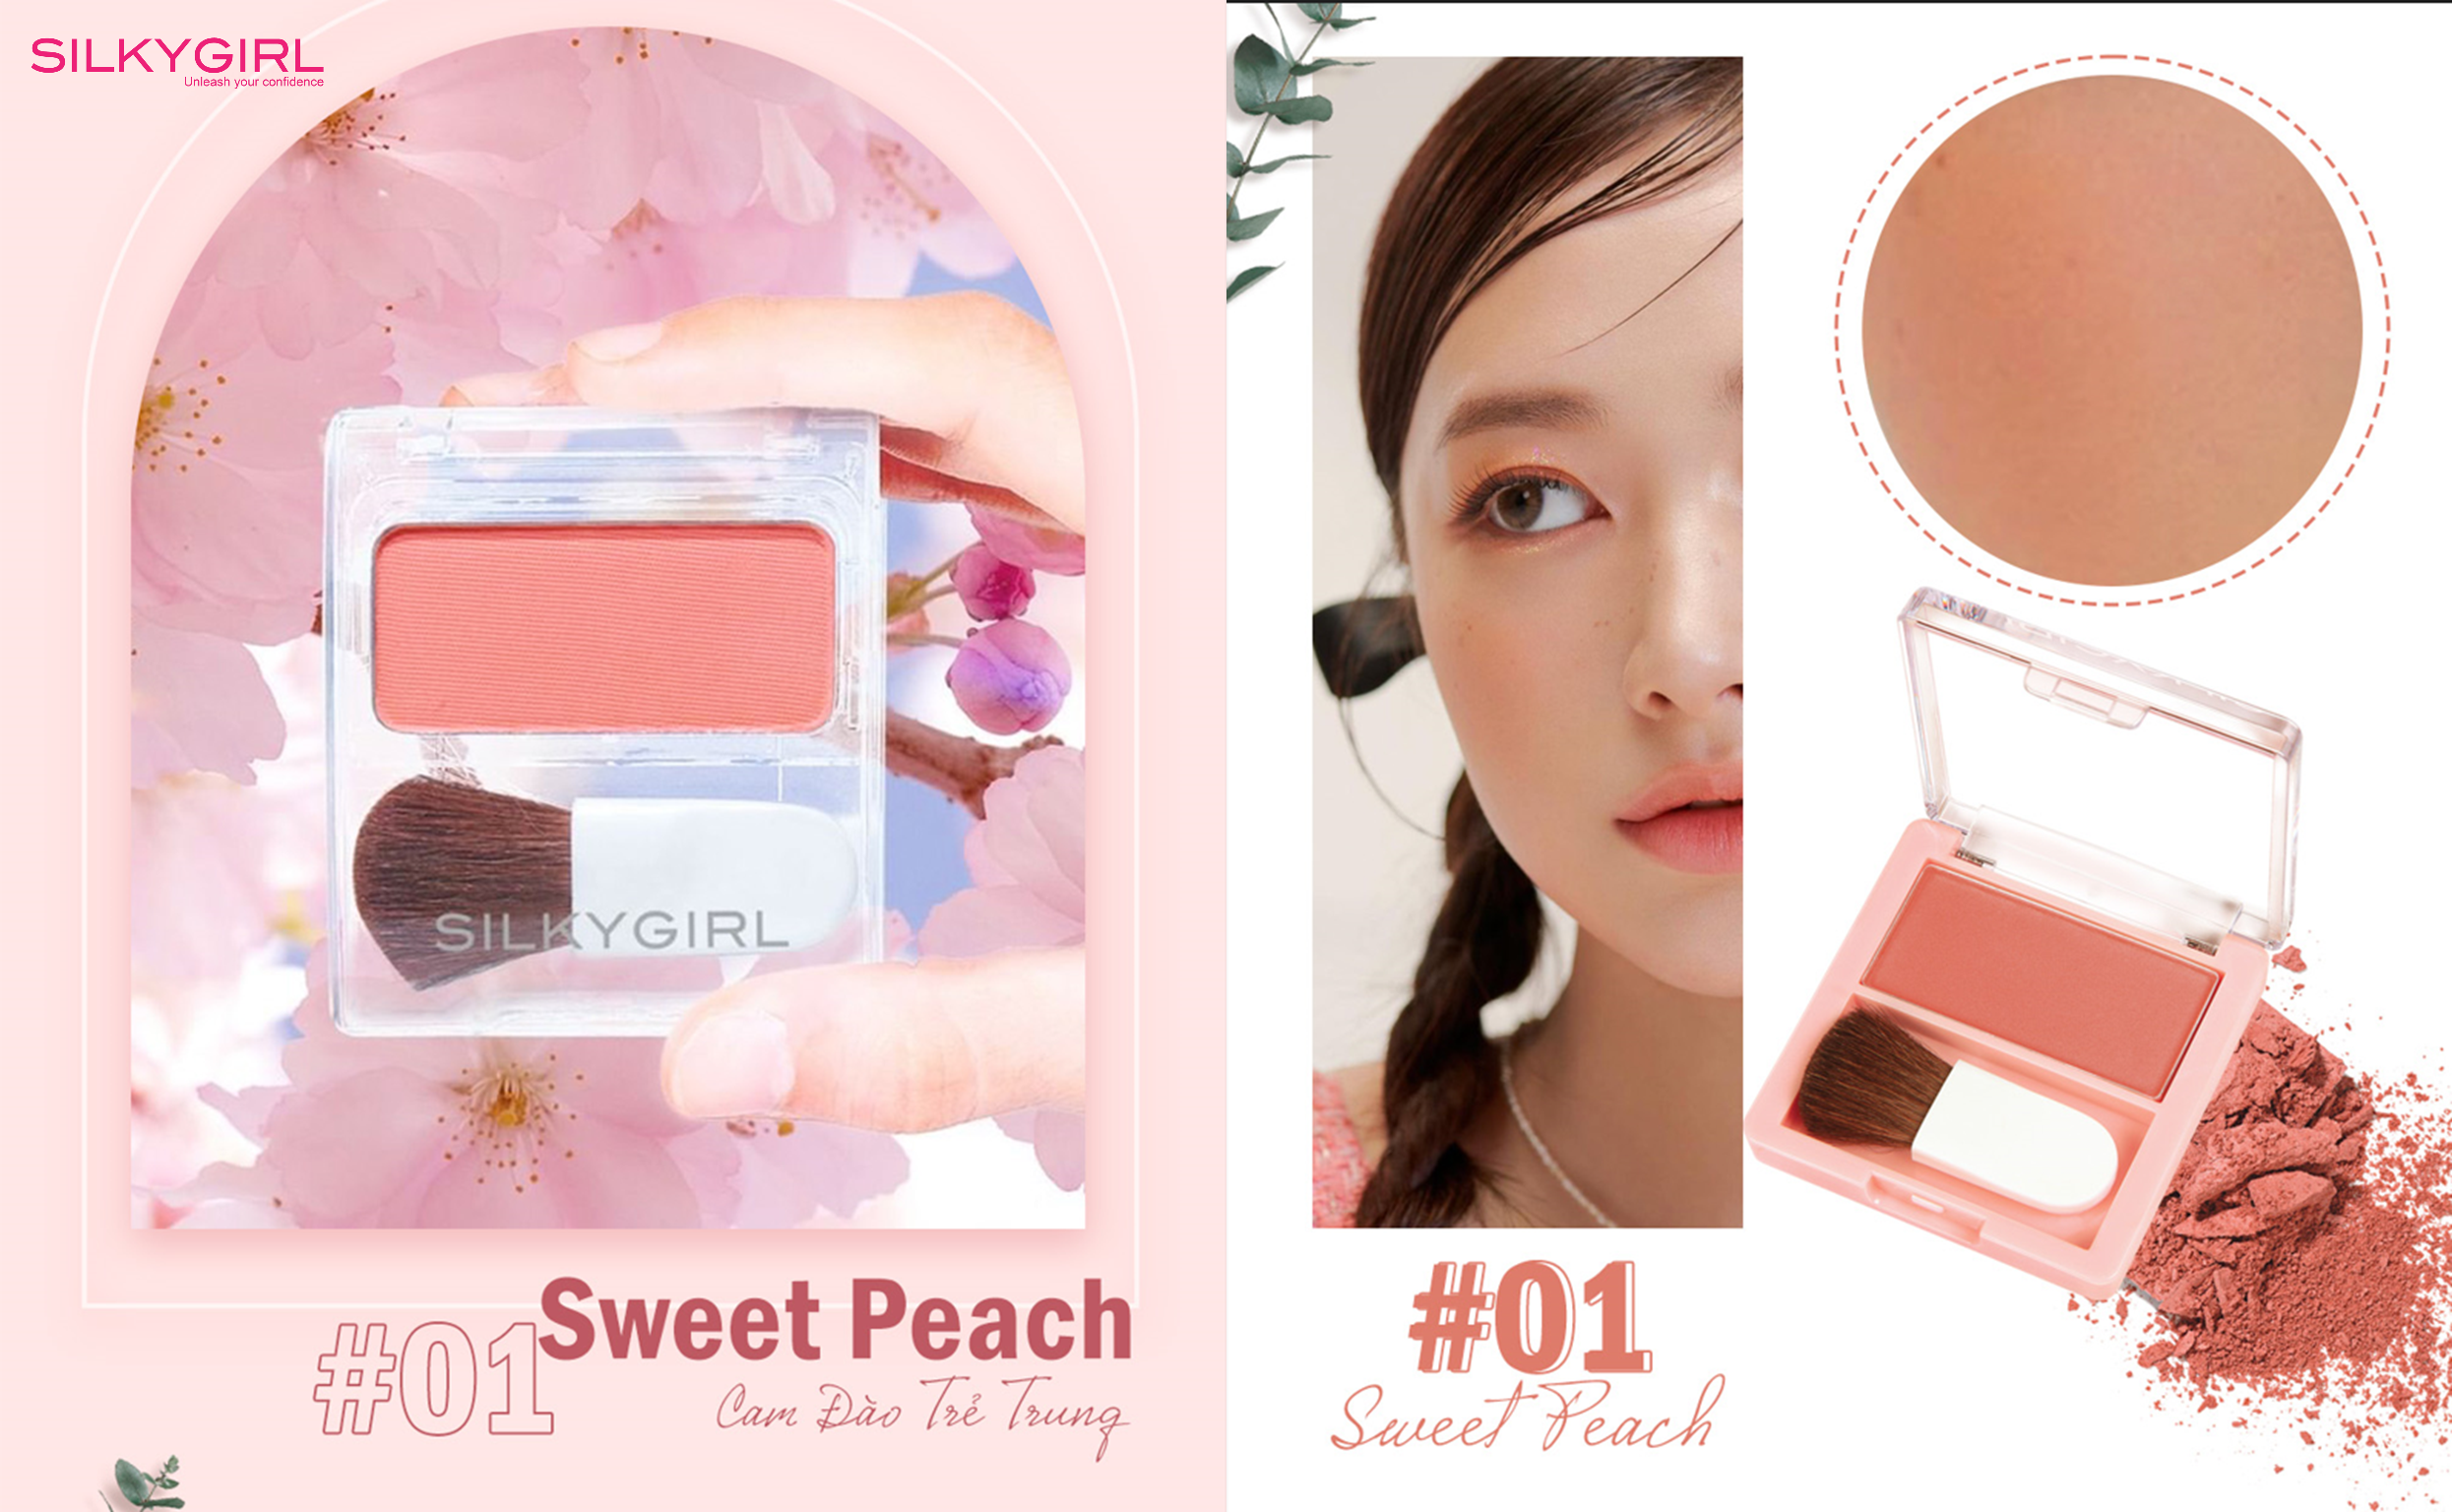 01 Sweet Peach - Màu cam đào